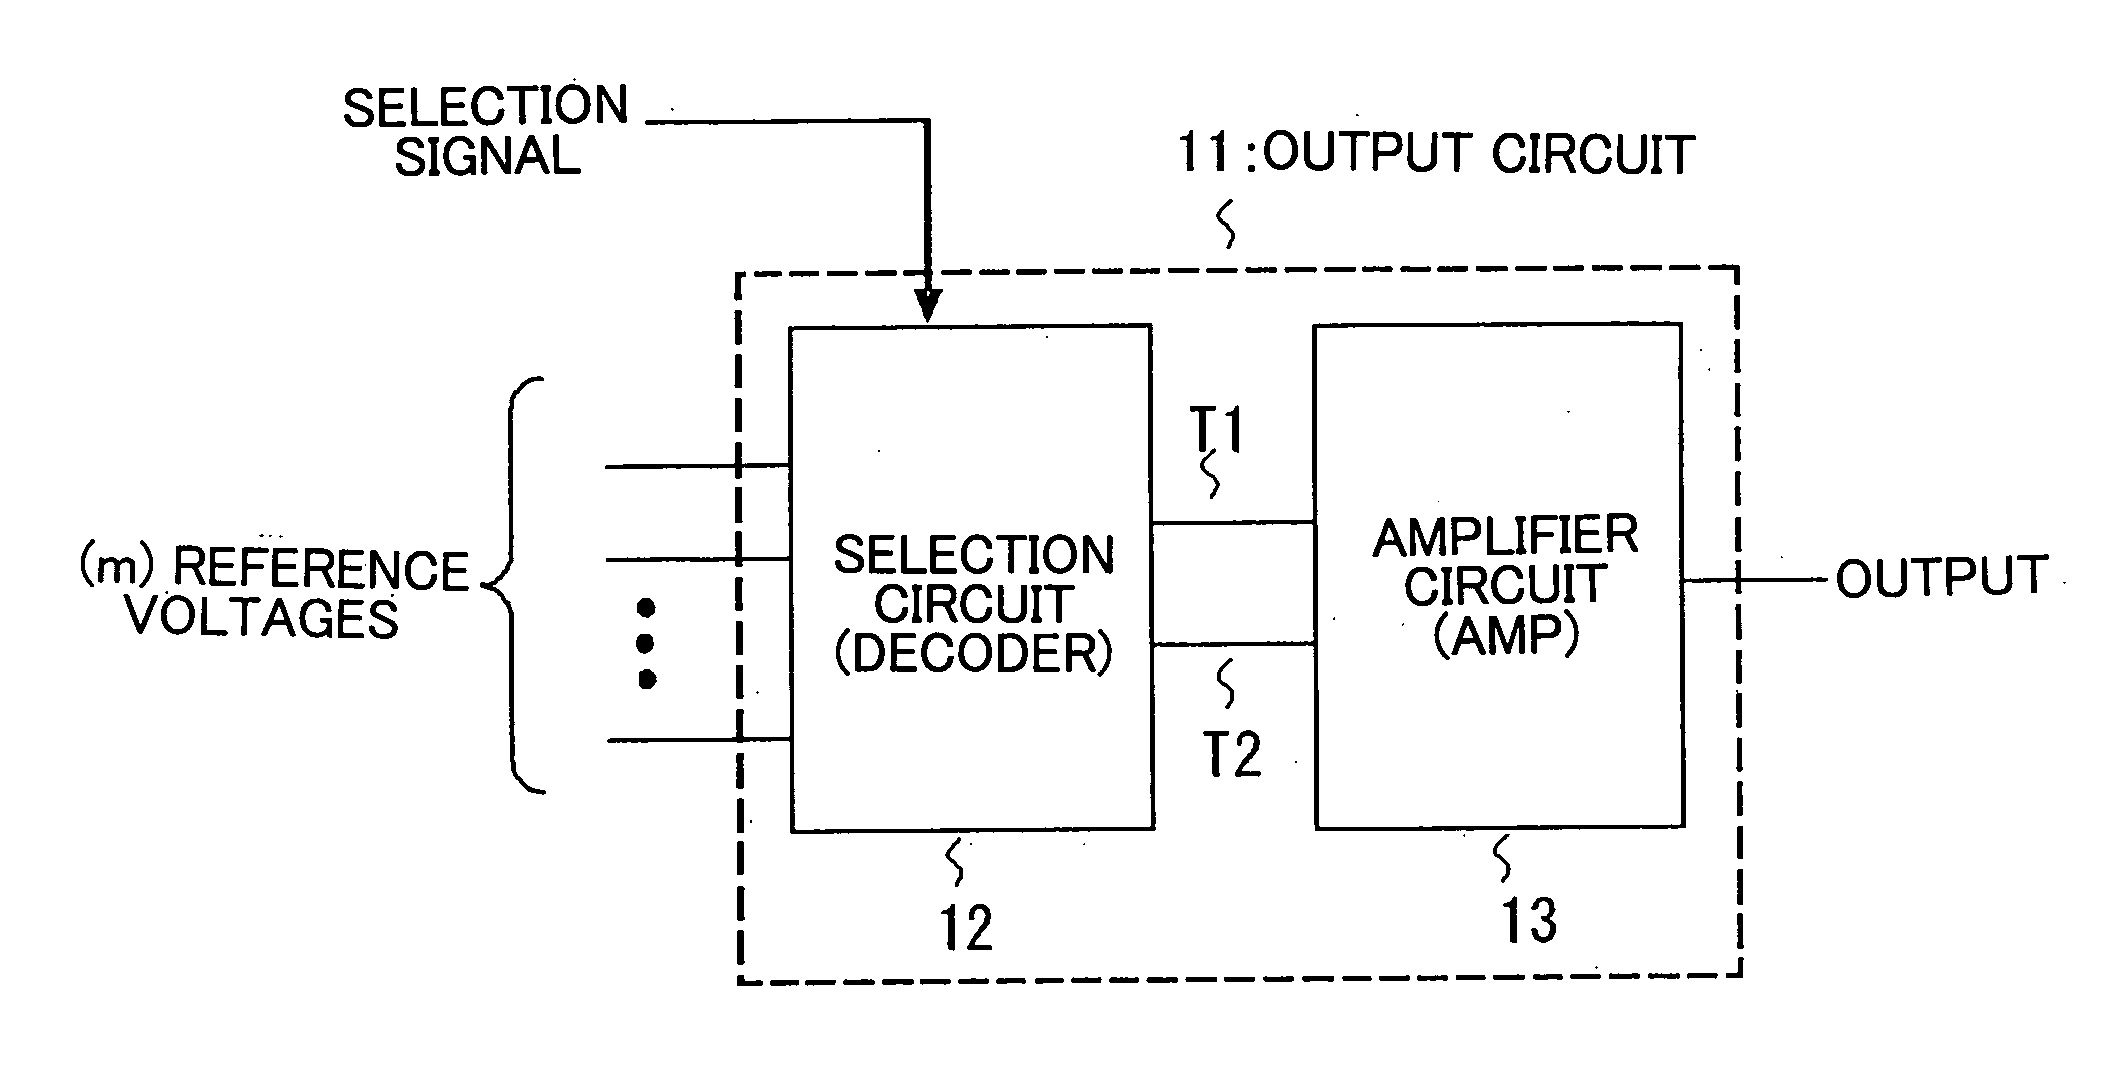 Output circuit, digital/analog circuit and display apparatus